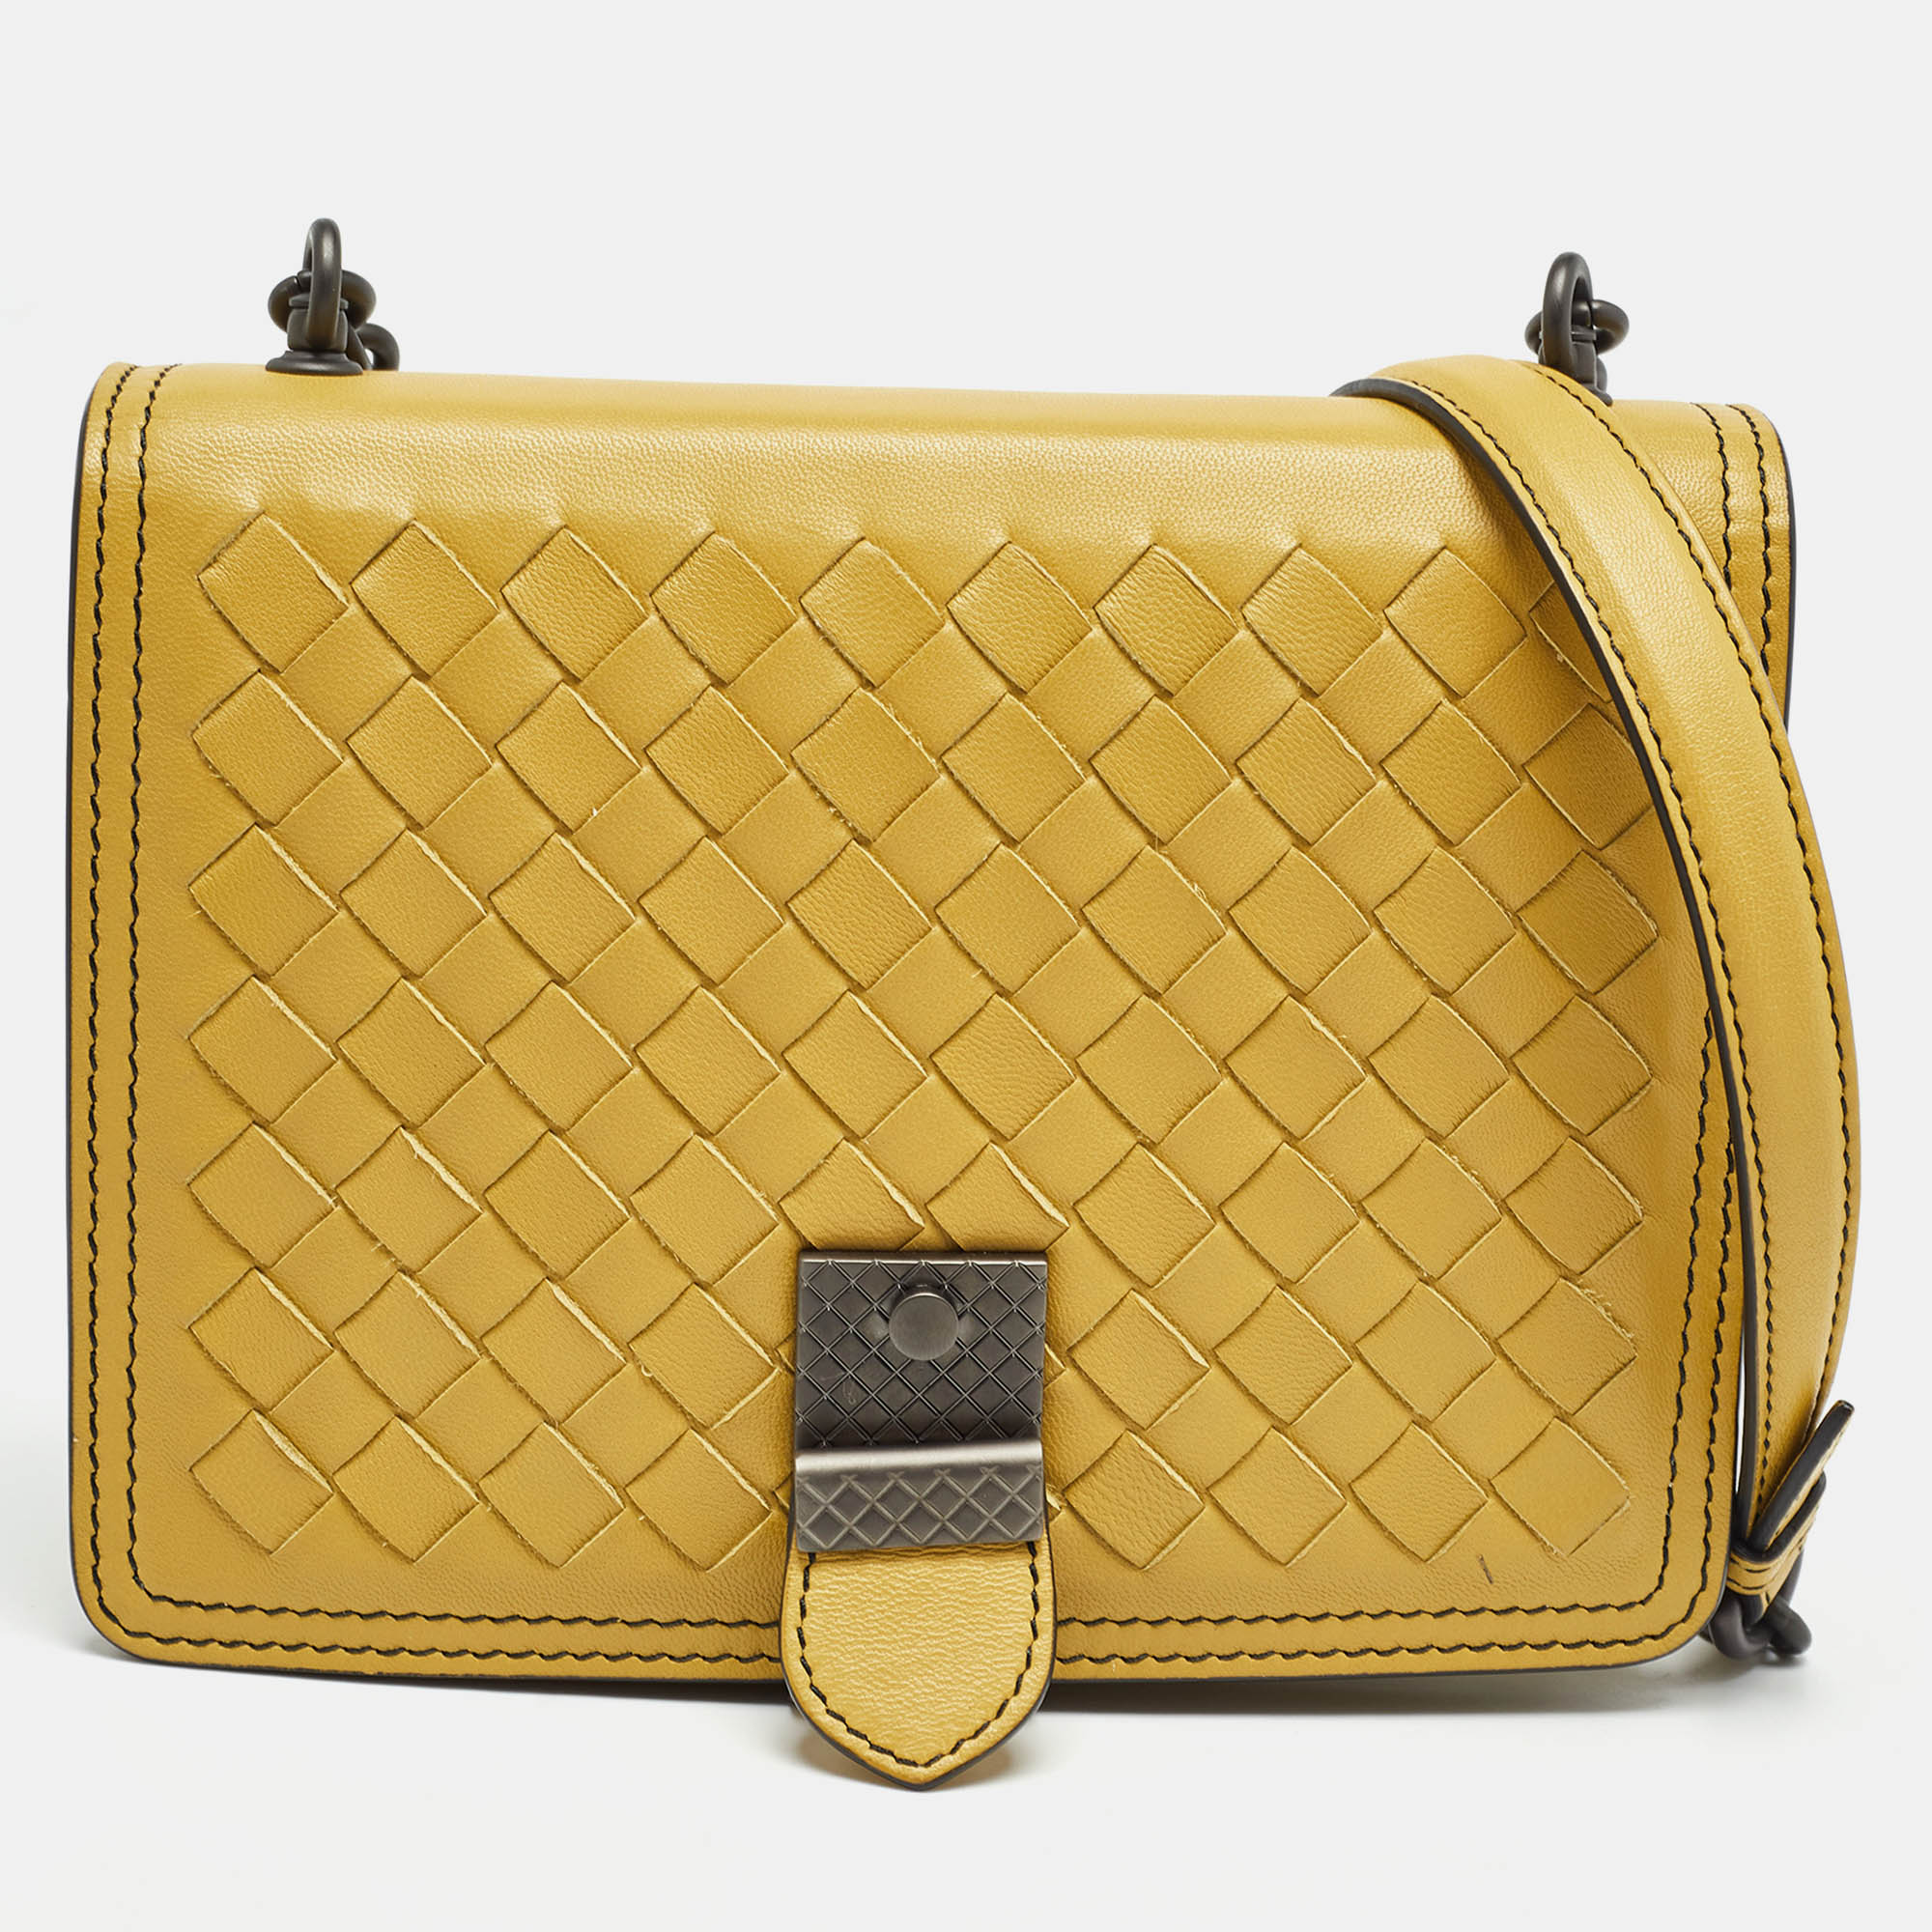 Bottega veneta light yellow intrecciato leather mini runway shoulder bag